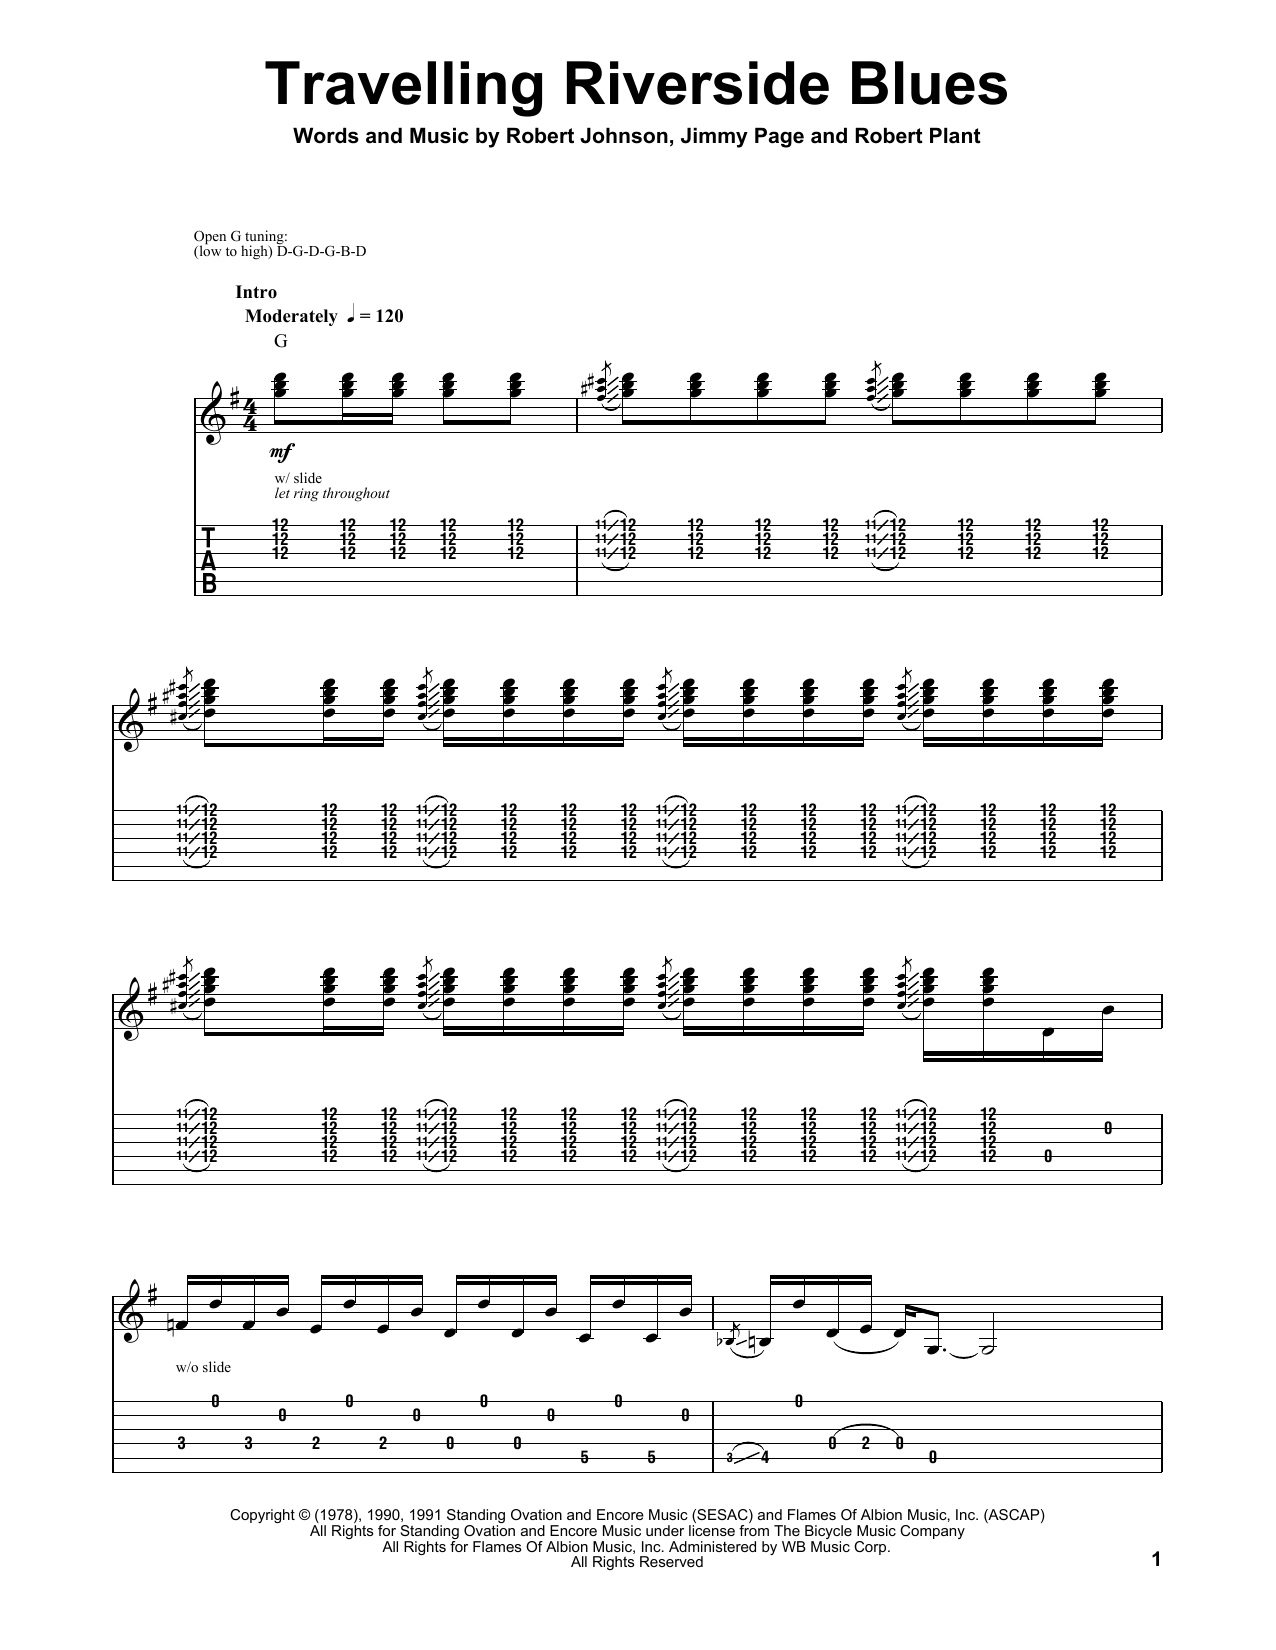 Robert Johnson Travelling Riverside Blues Sheet Music Notes & Chords for Guitar Tab Play-Along - Download or Print PDF